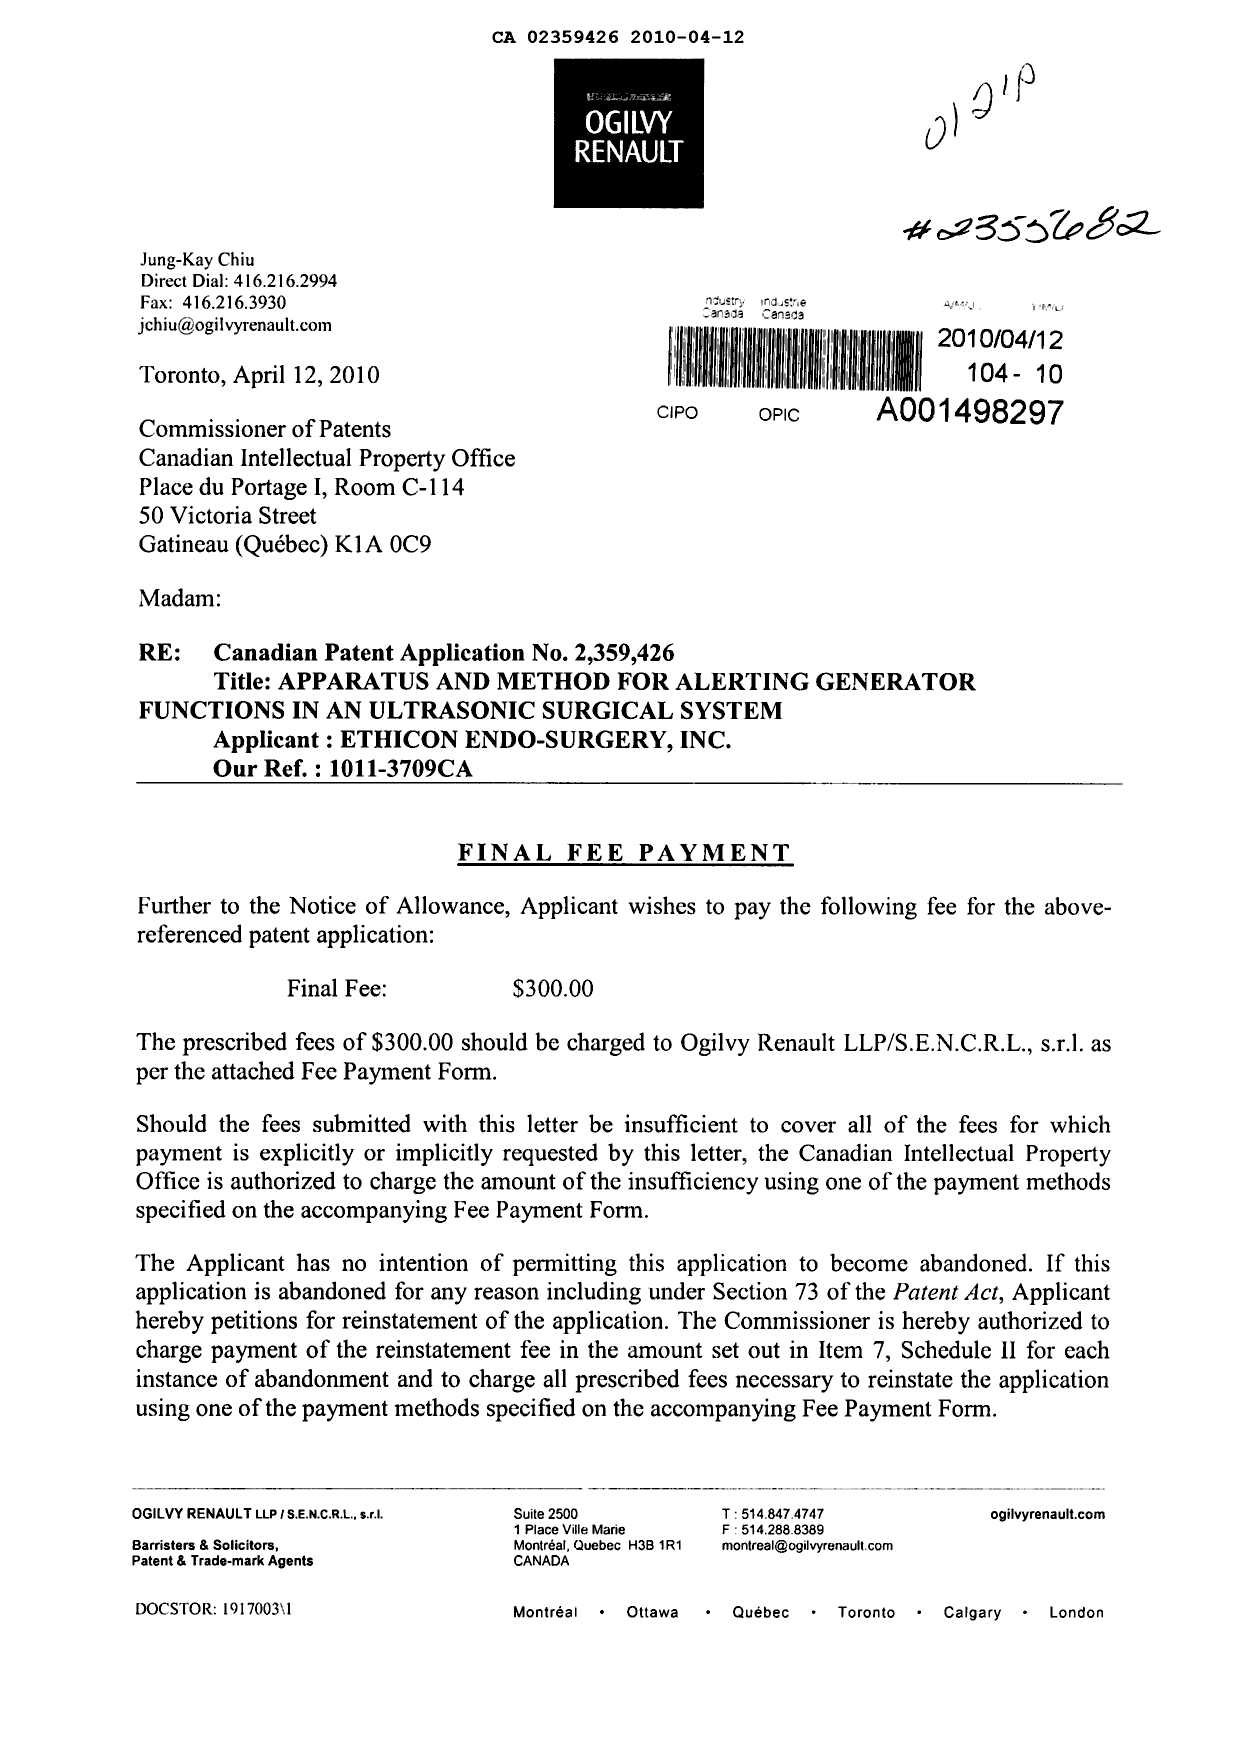 Canadian Patent Document 2359426. Correspondence 20100412. Image 1 of 2